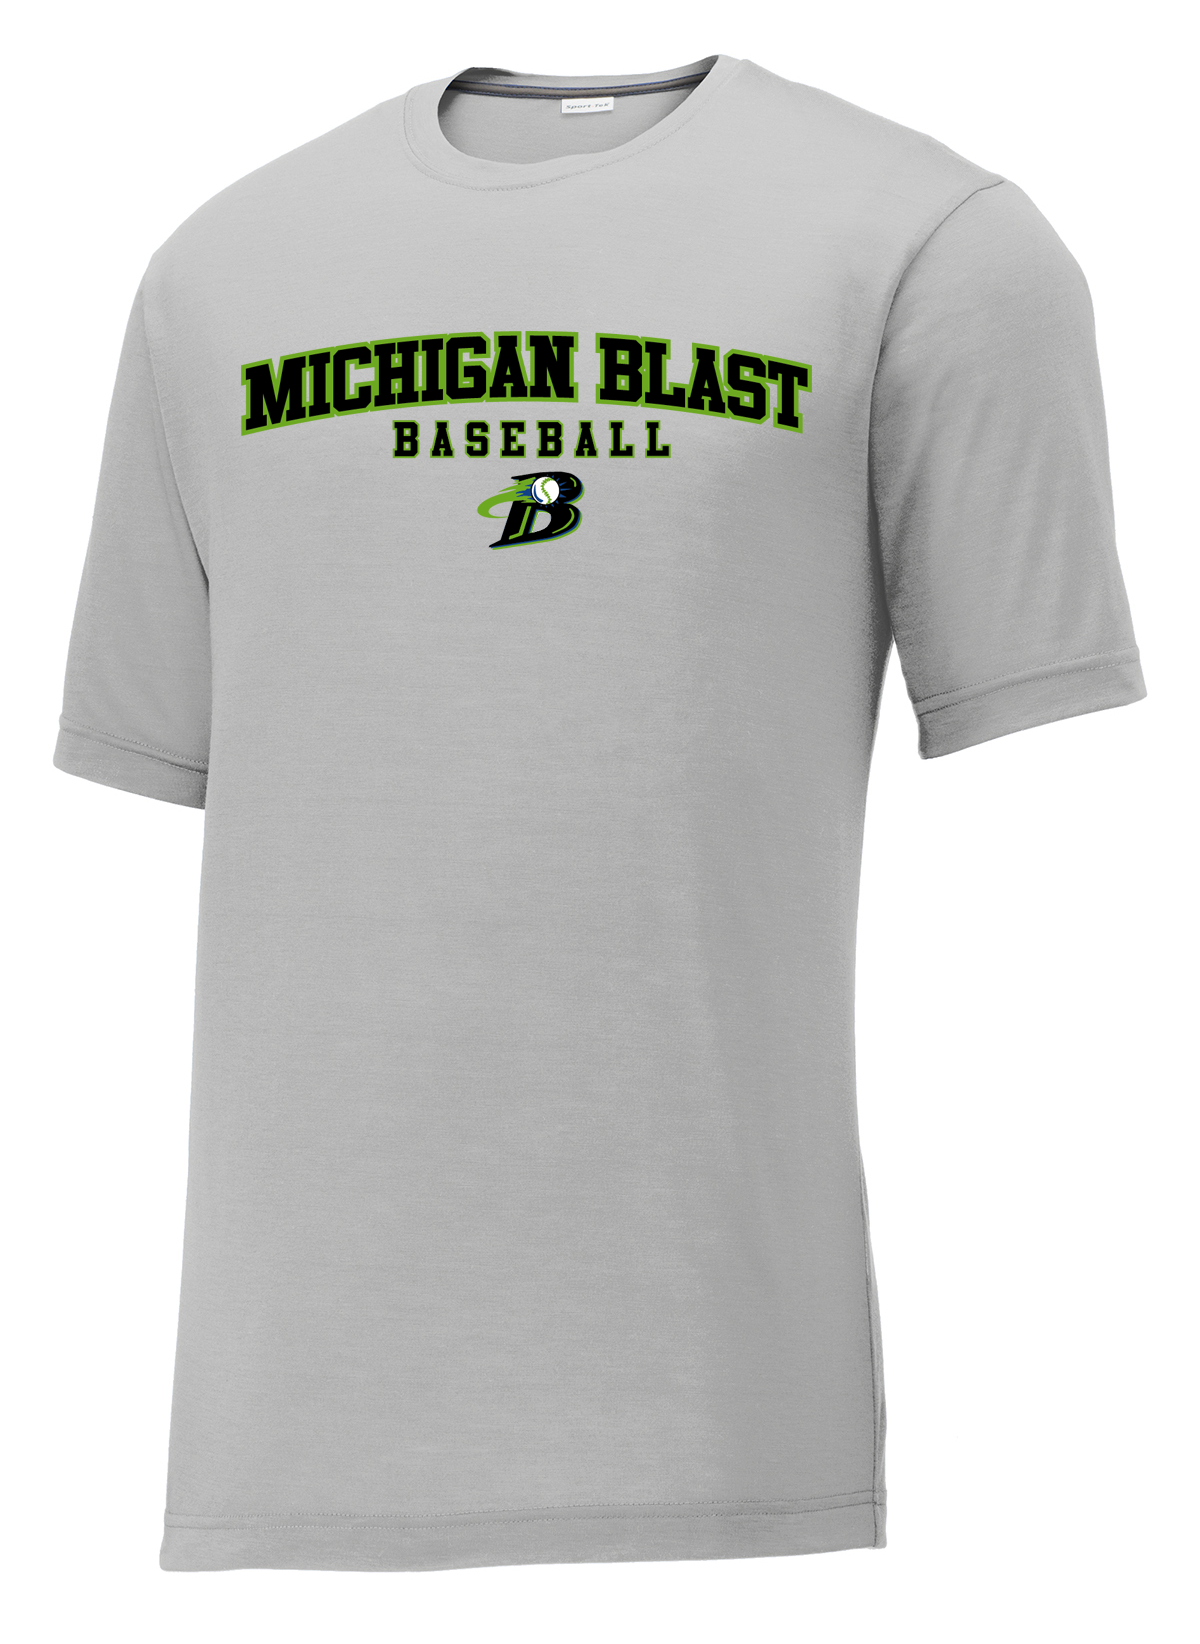 Michigan Blast Elite Baseball CottonTouch Performance T-Shirt